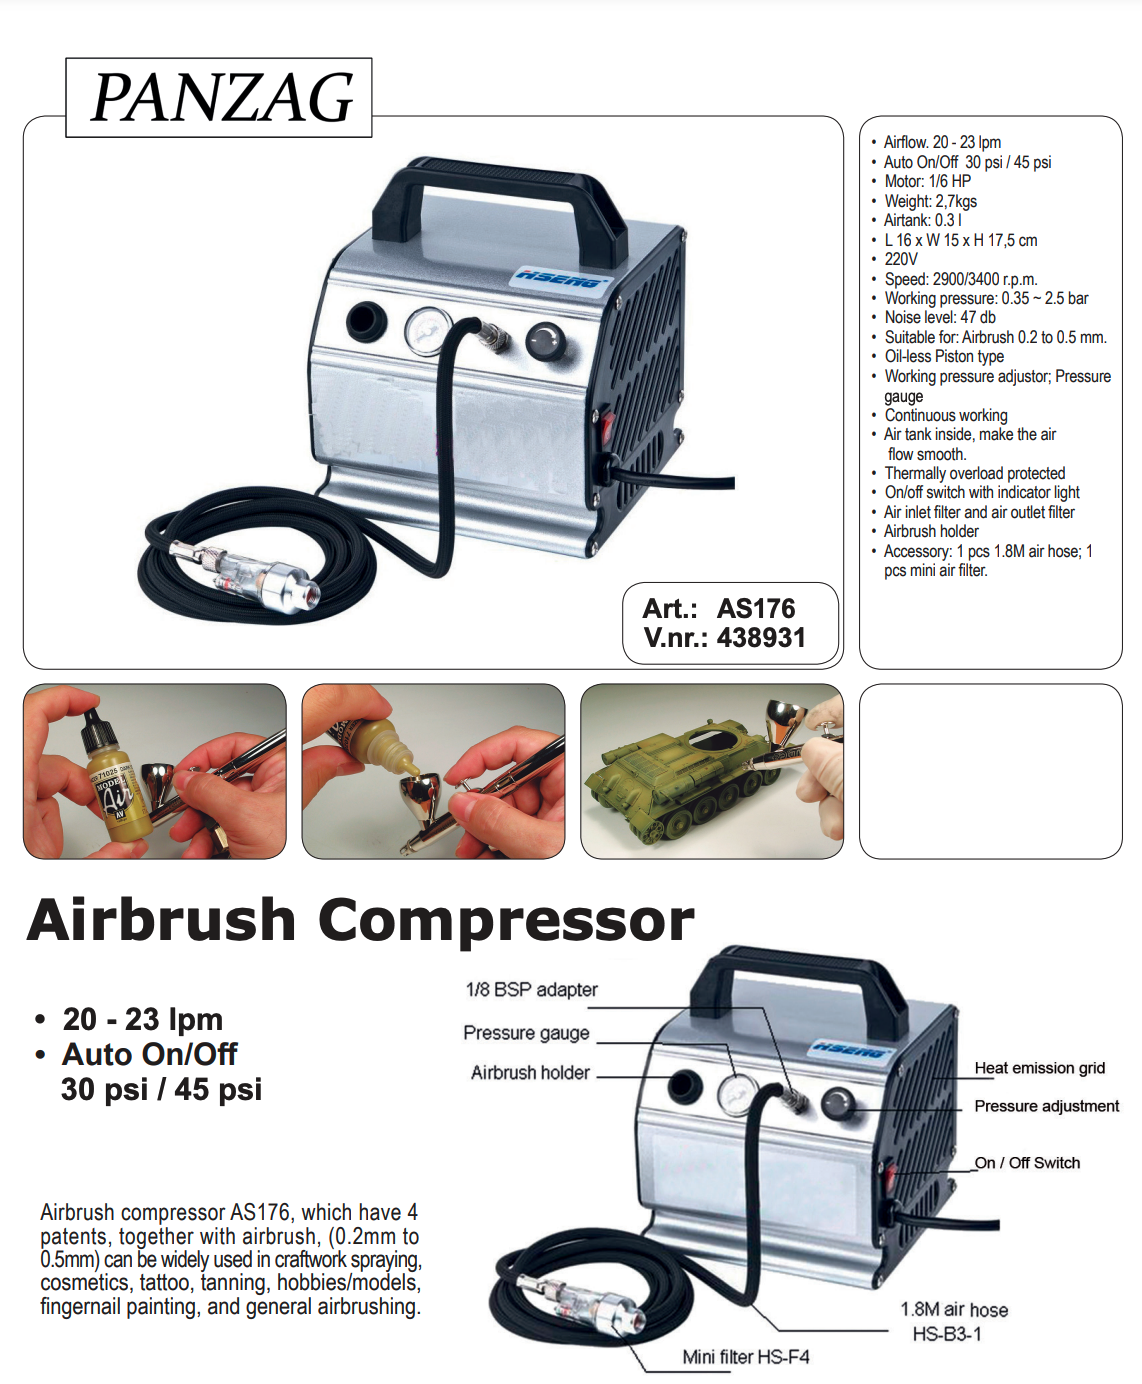 Kompressor till Airbrush  AS176 - 438931 fr Panzag